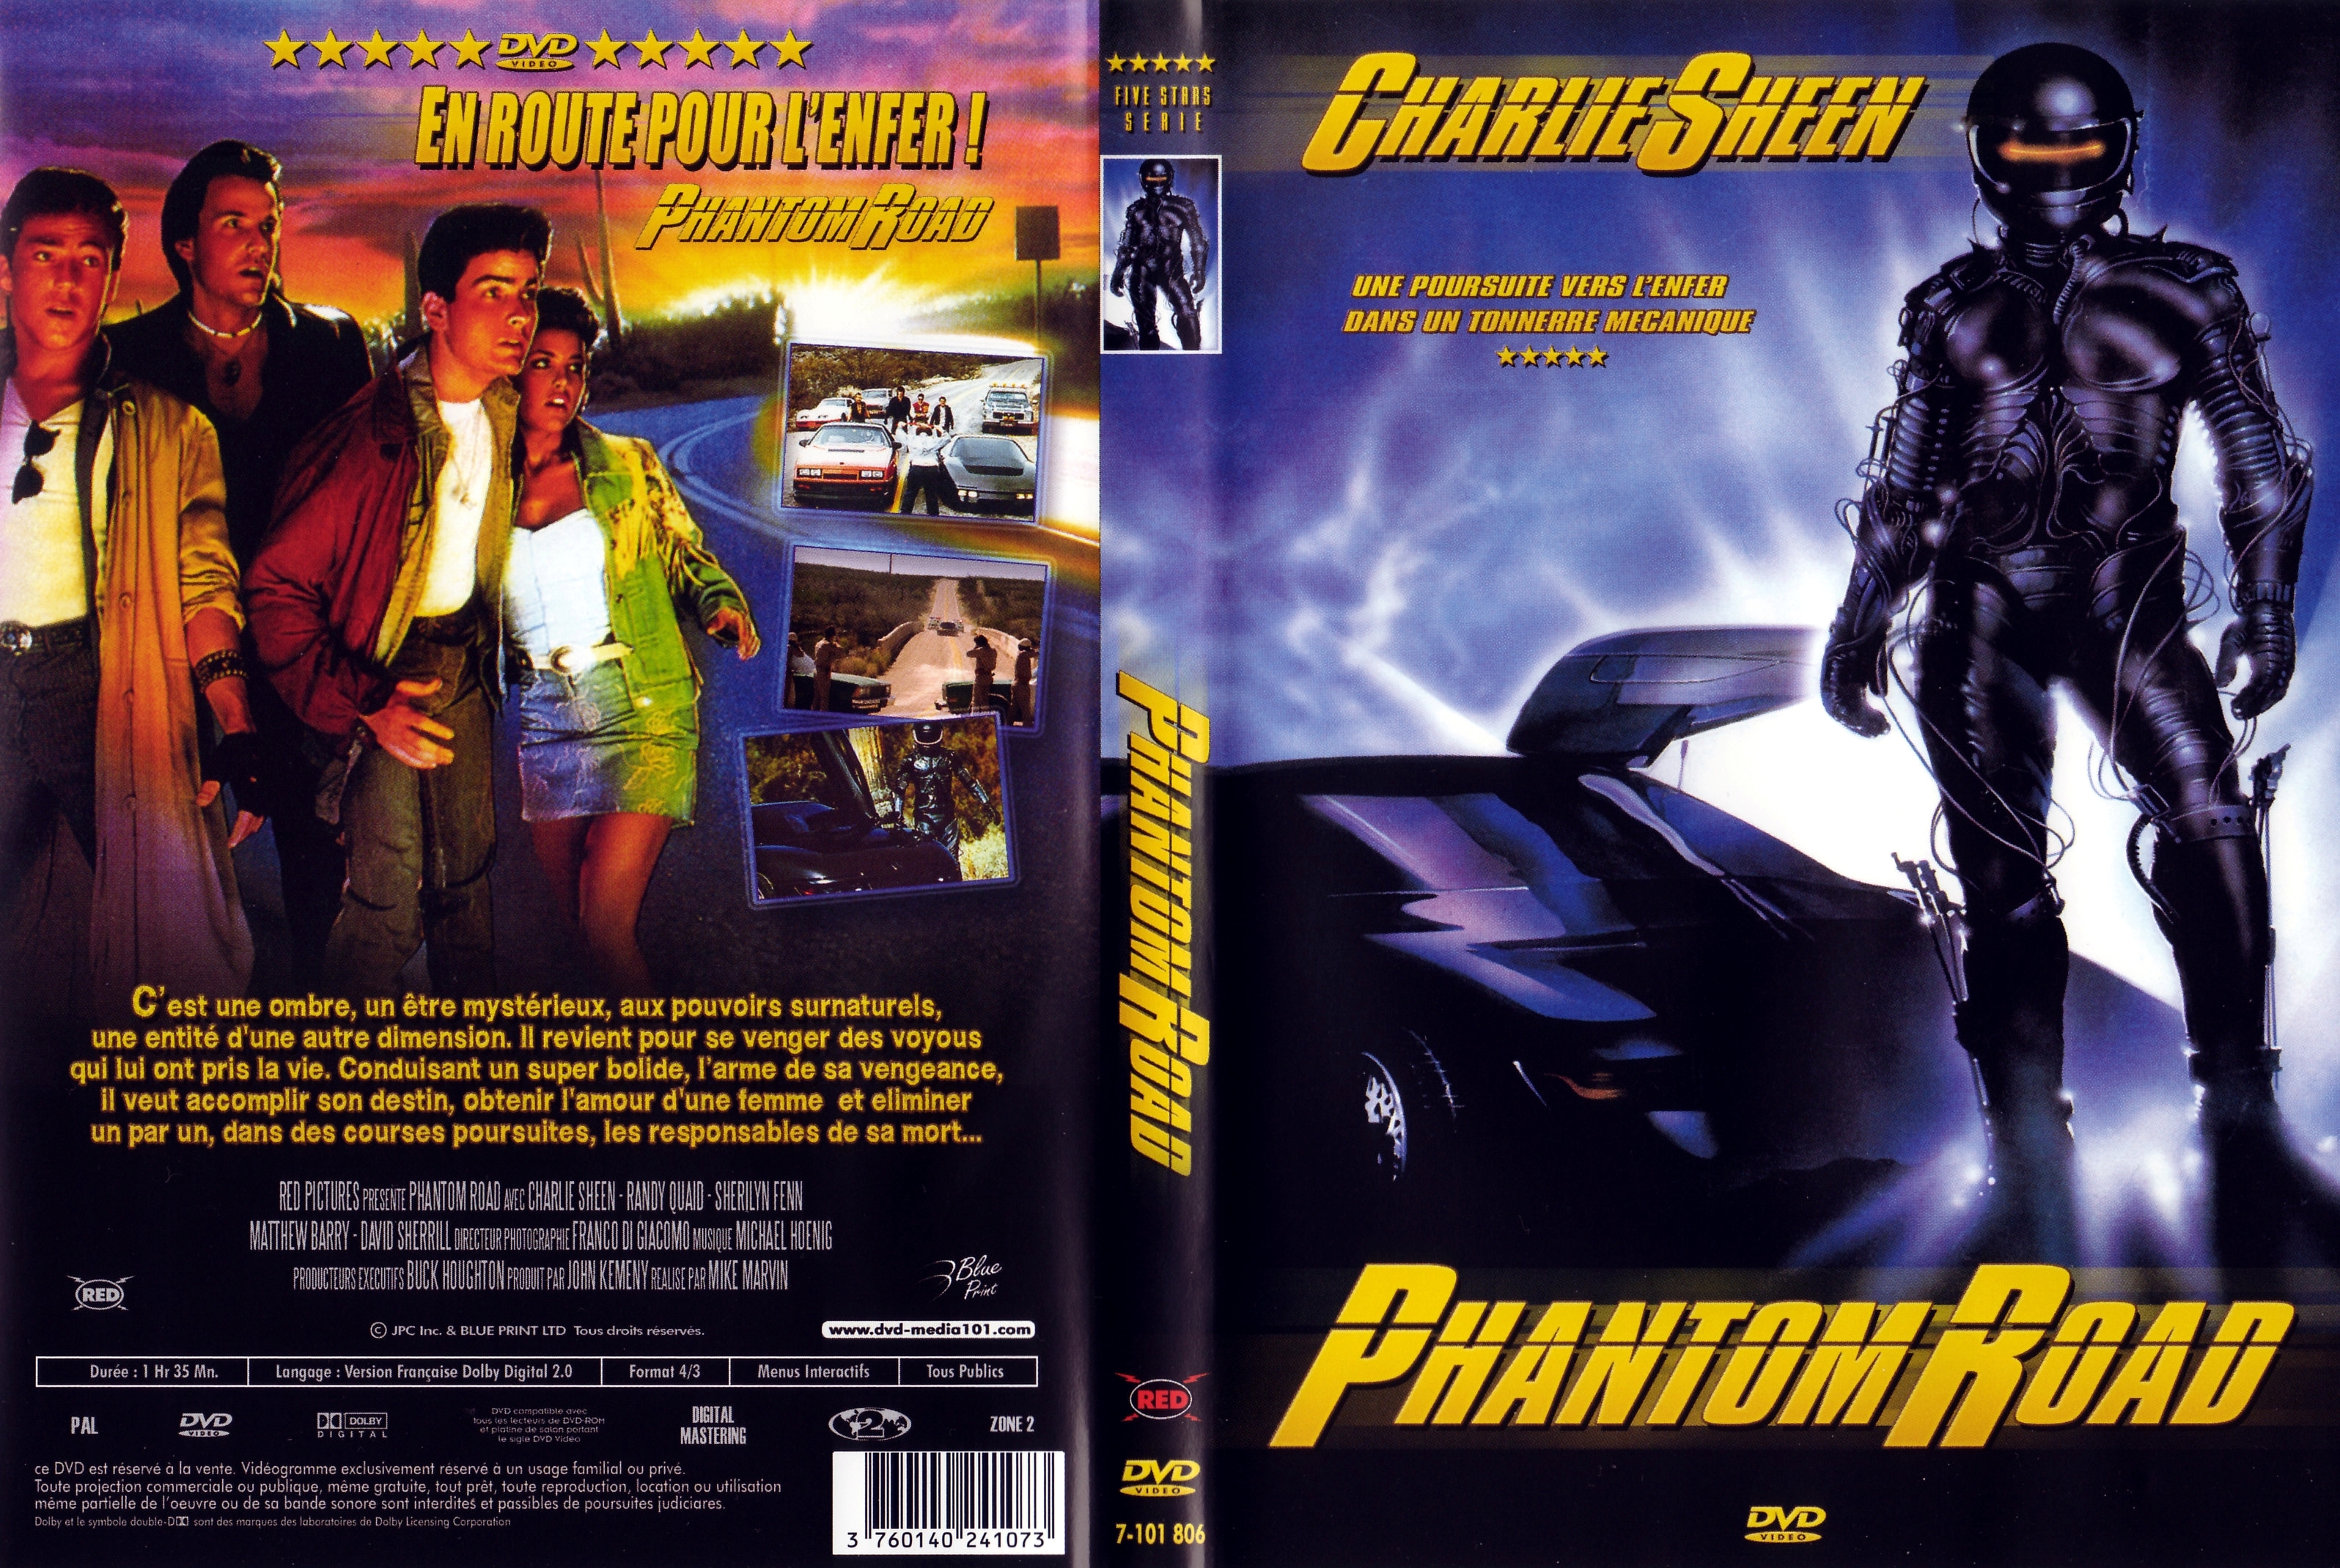 Jaquette DVD Phantom road